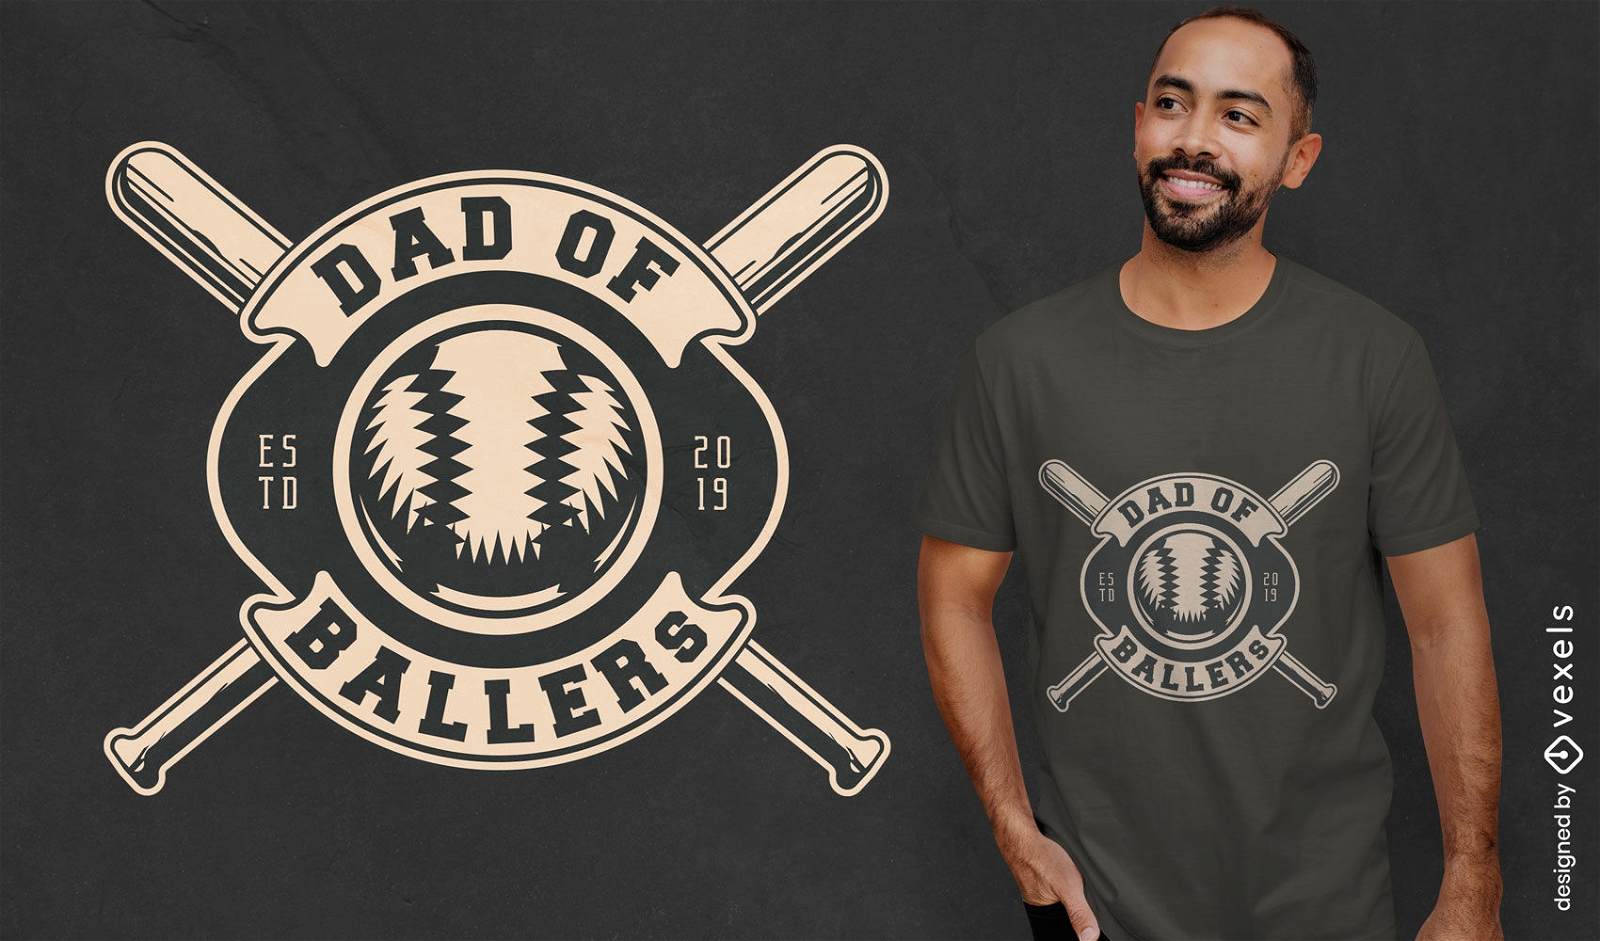 Baseball dad quote t-shirt design